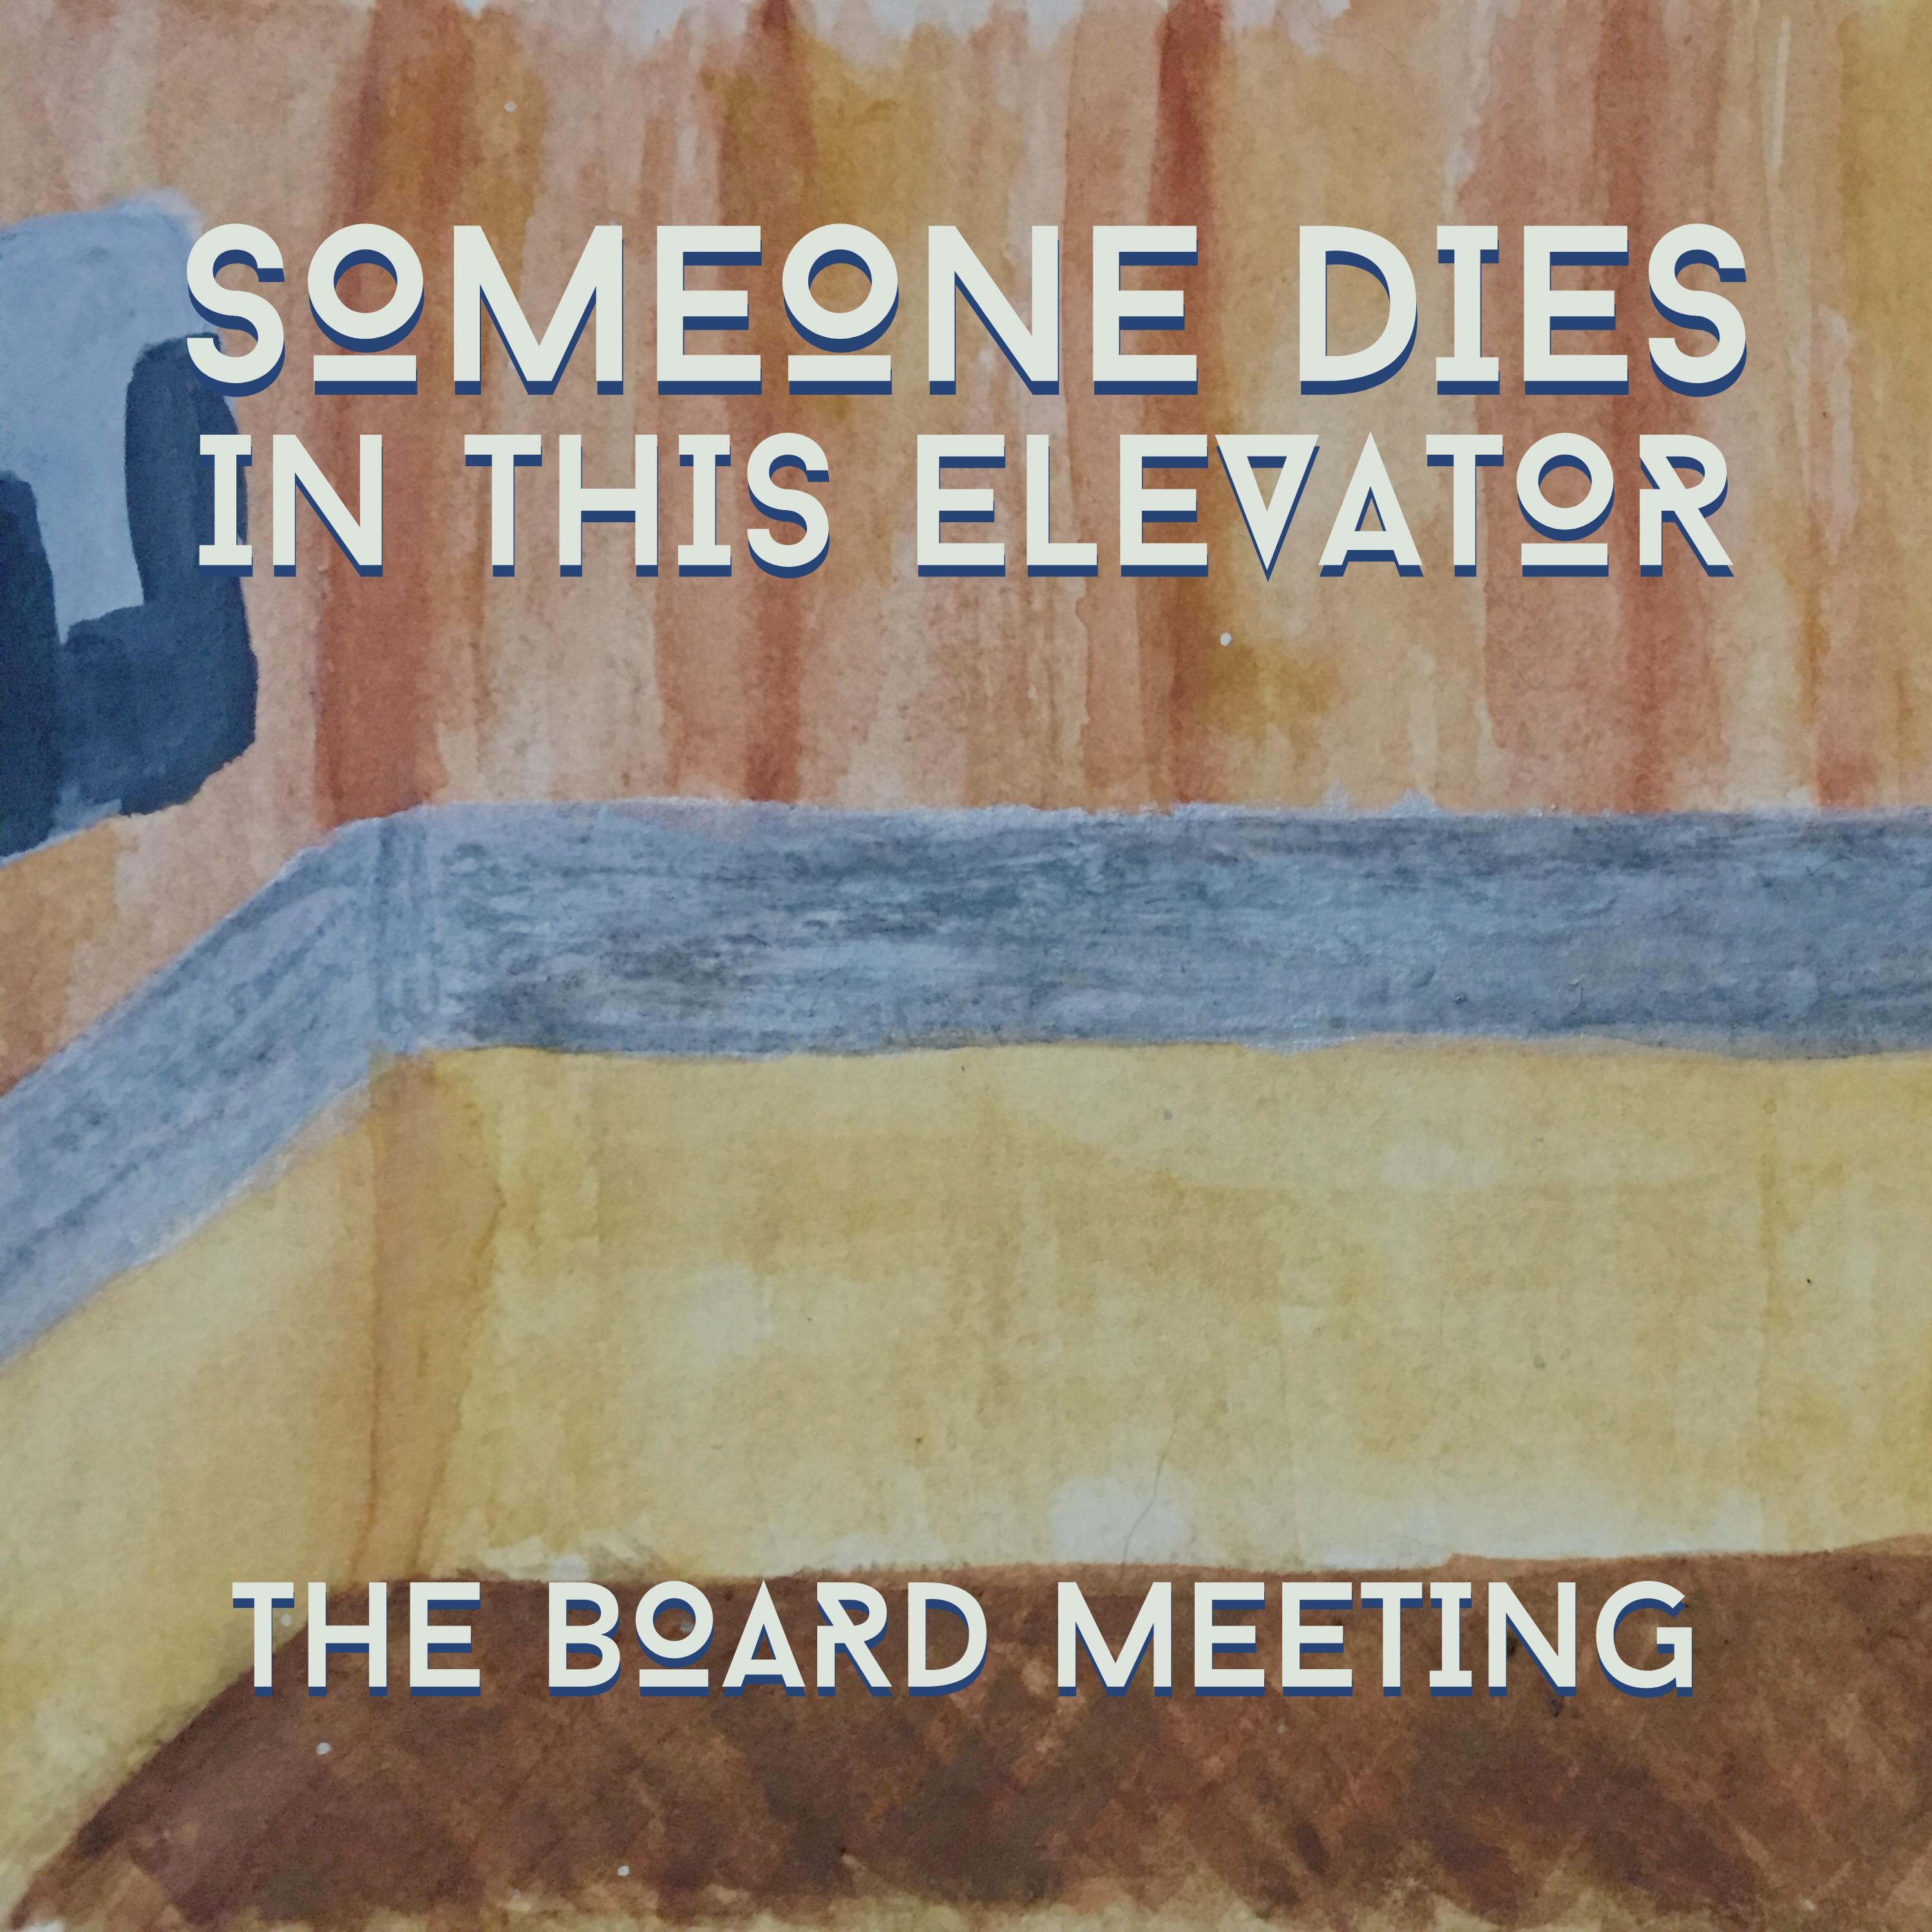 The Board Meeting